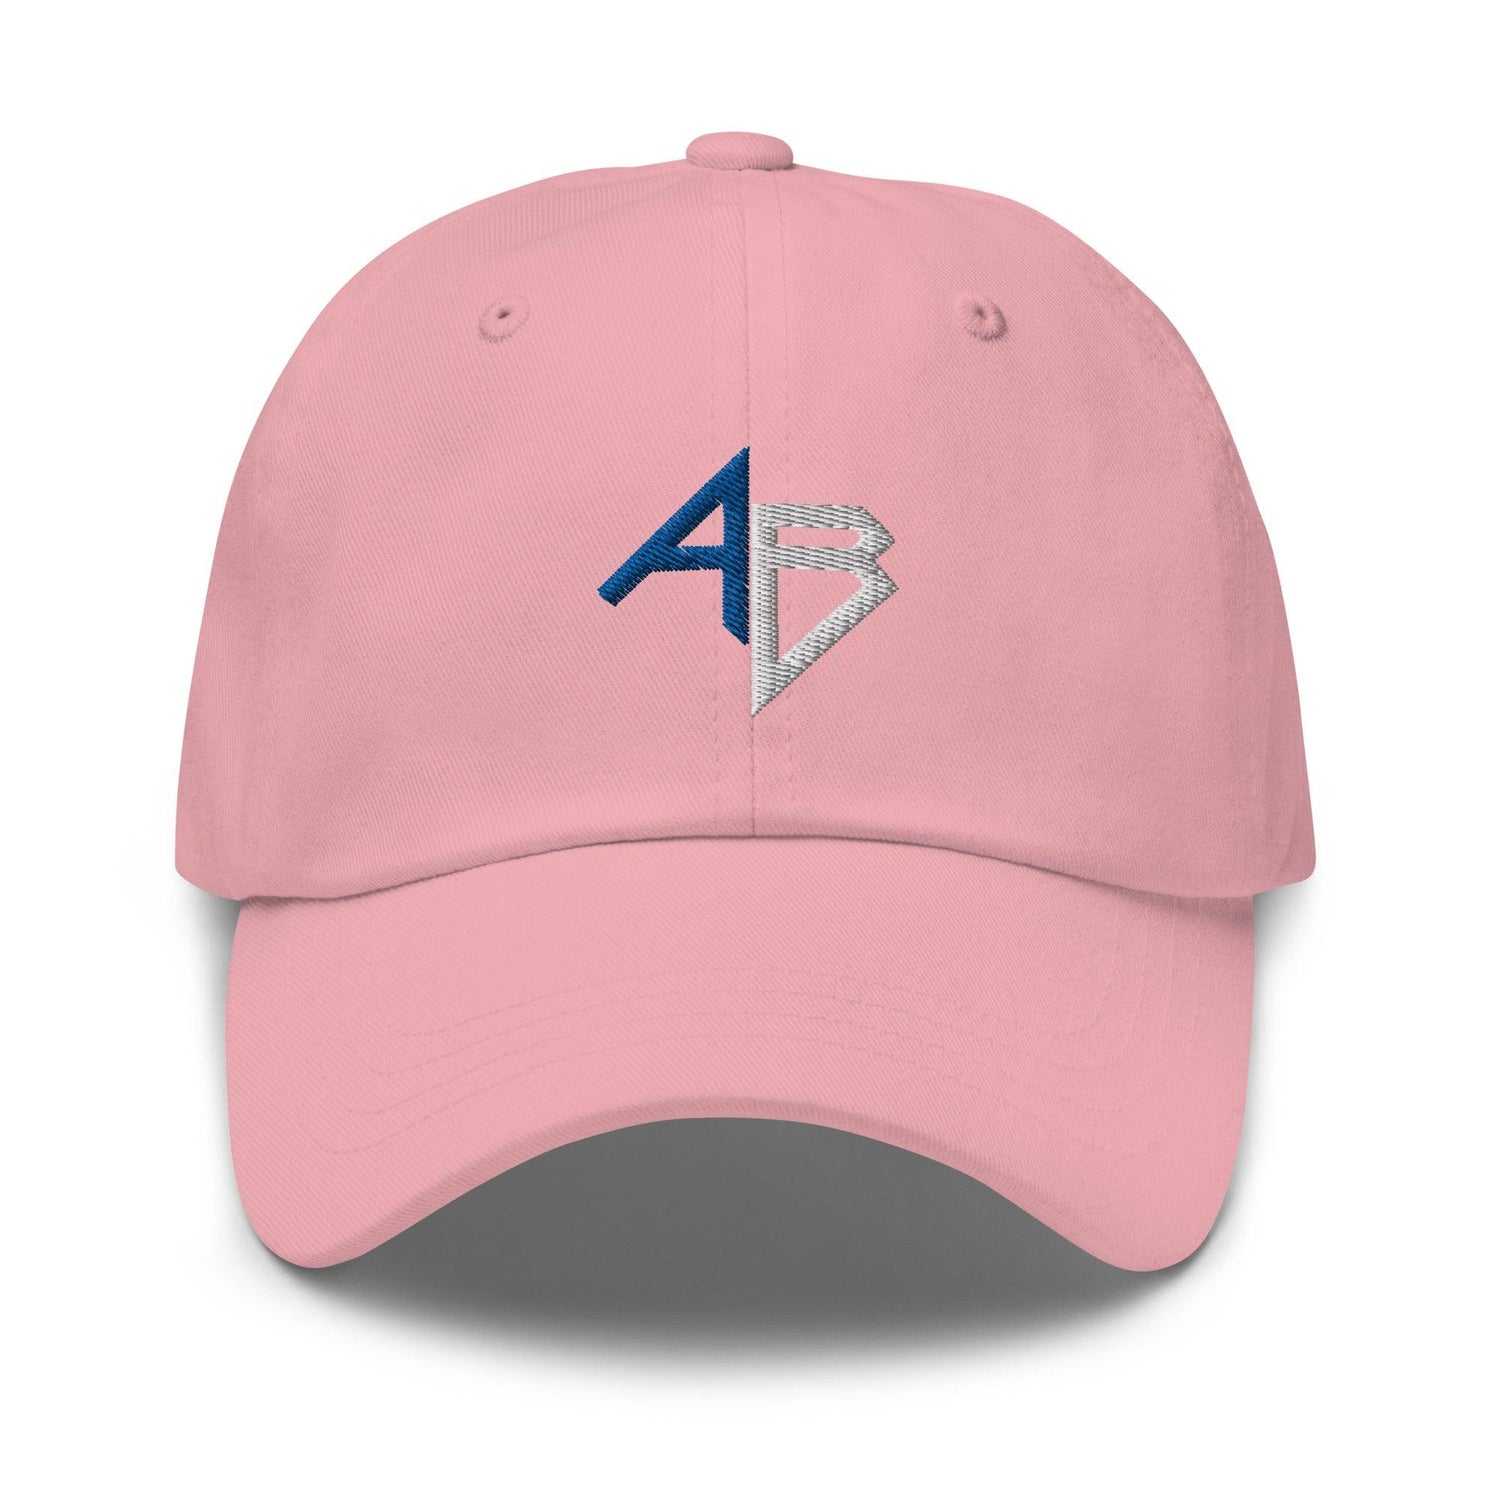 Adam Boucher “AB” hat - Fan Arch